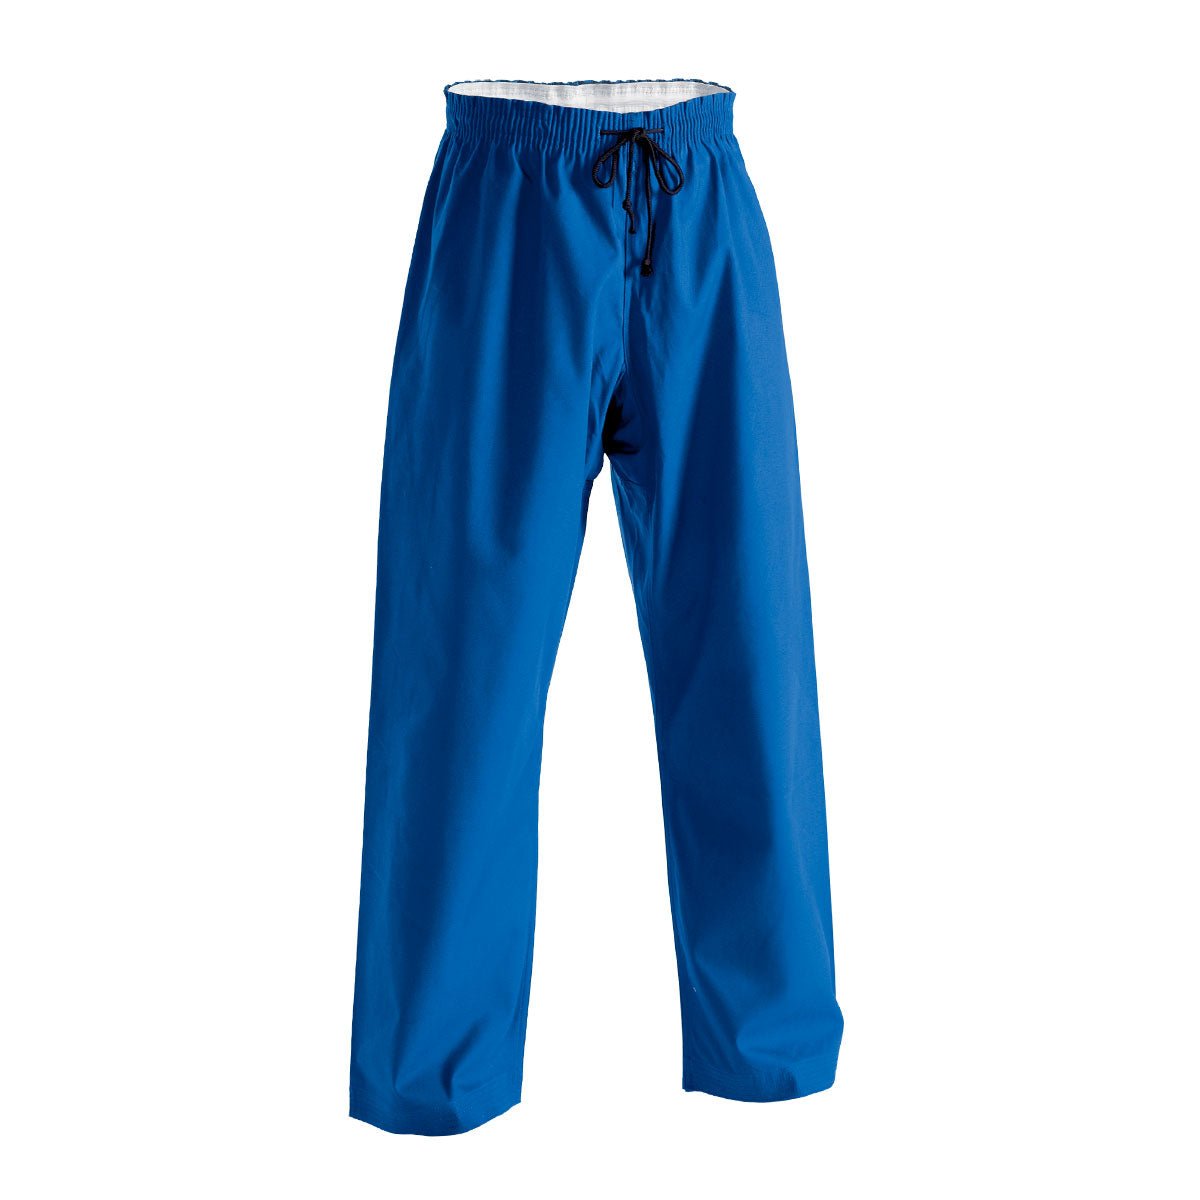 10 oz. Middleweight Brushed Cotton Elastic Waist Pants Blue